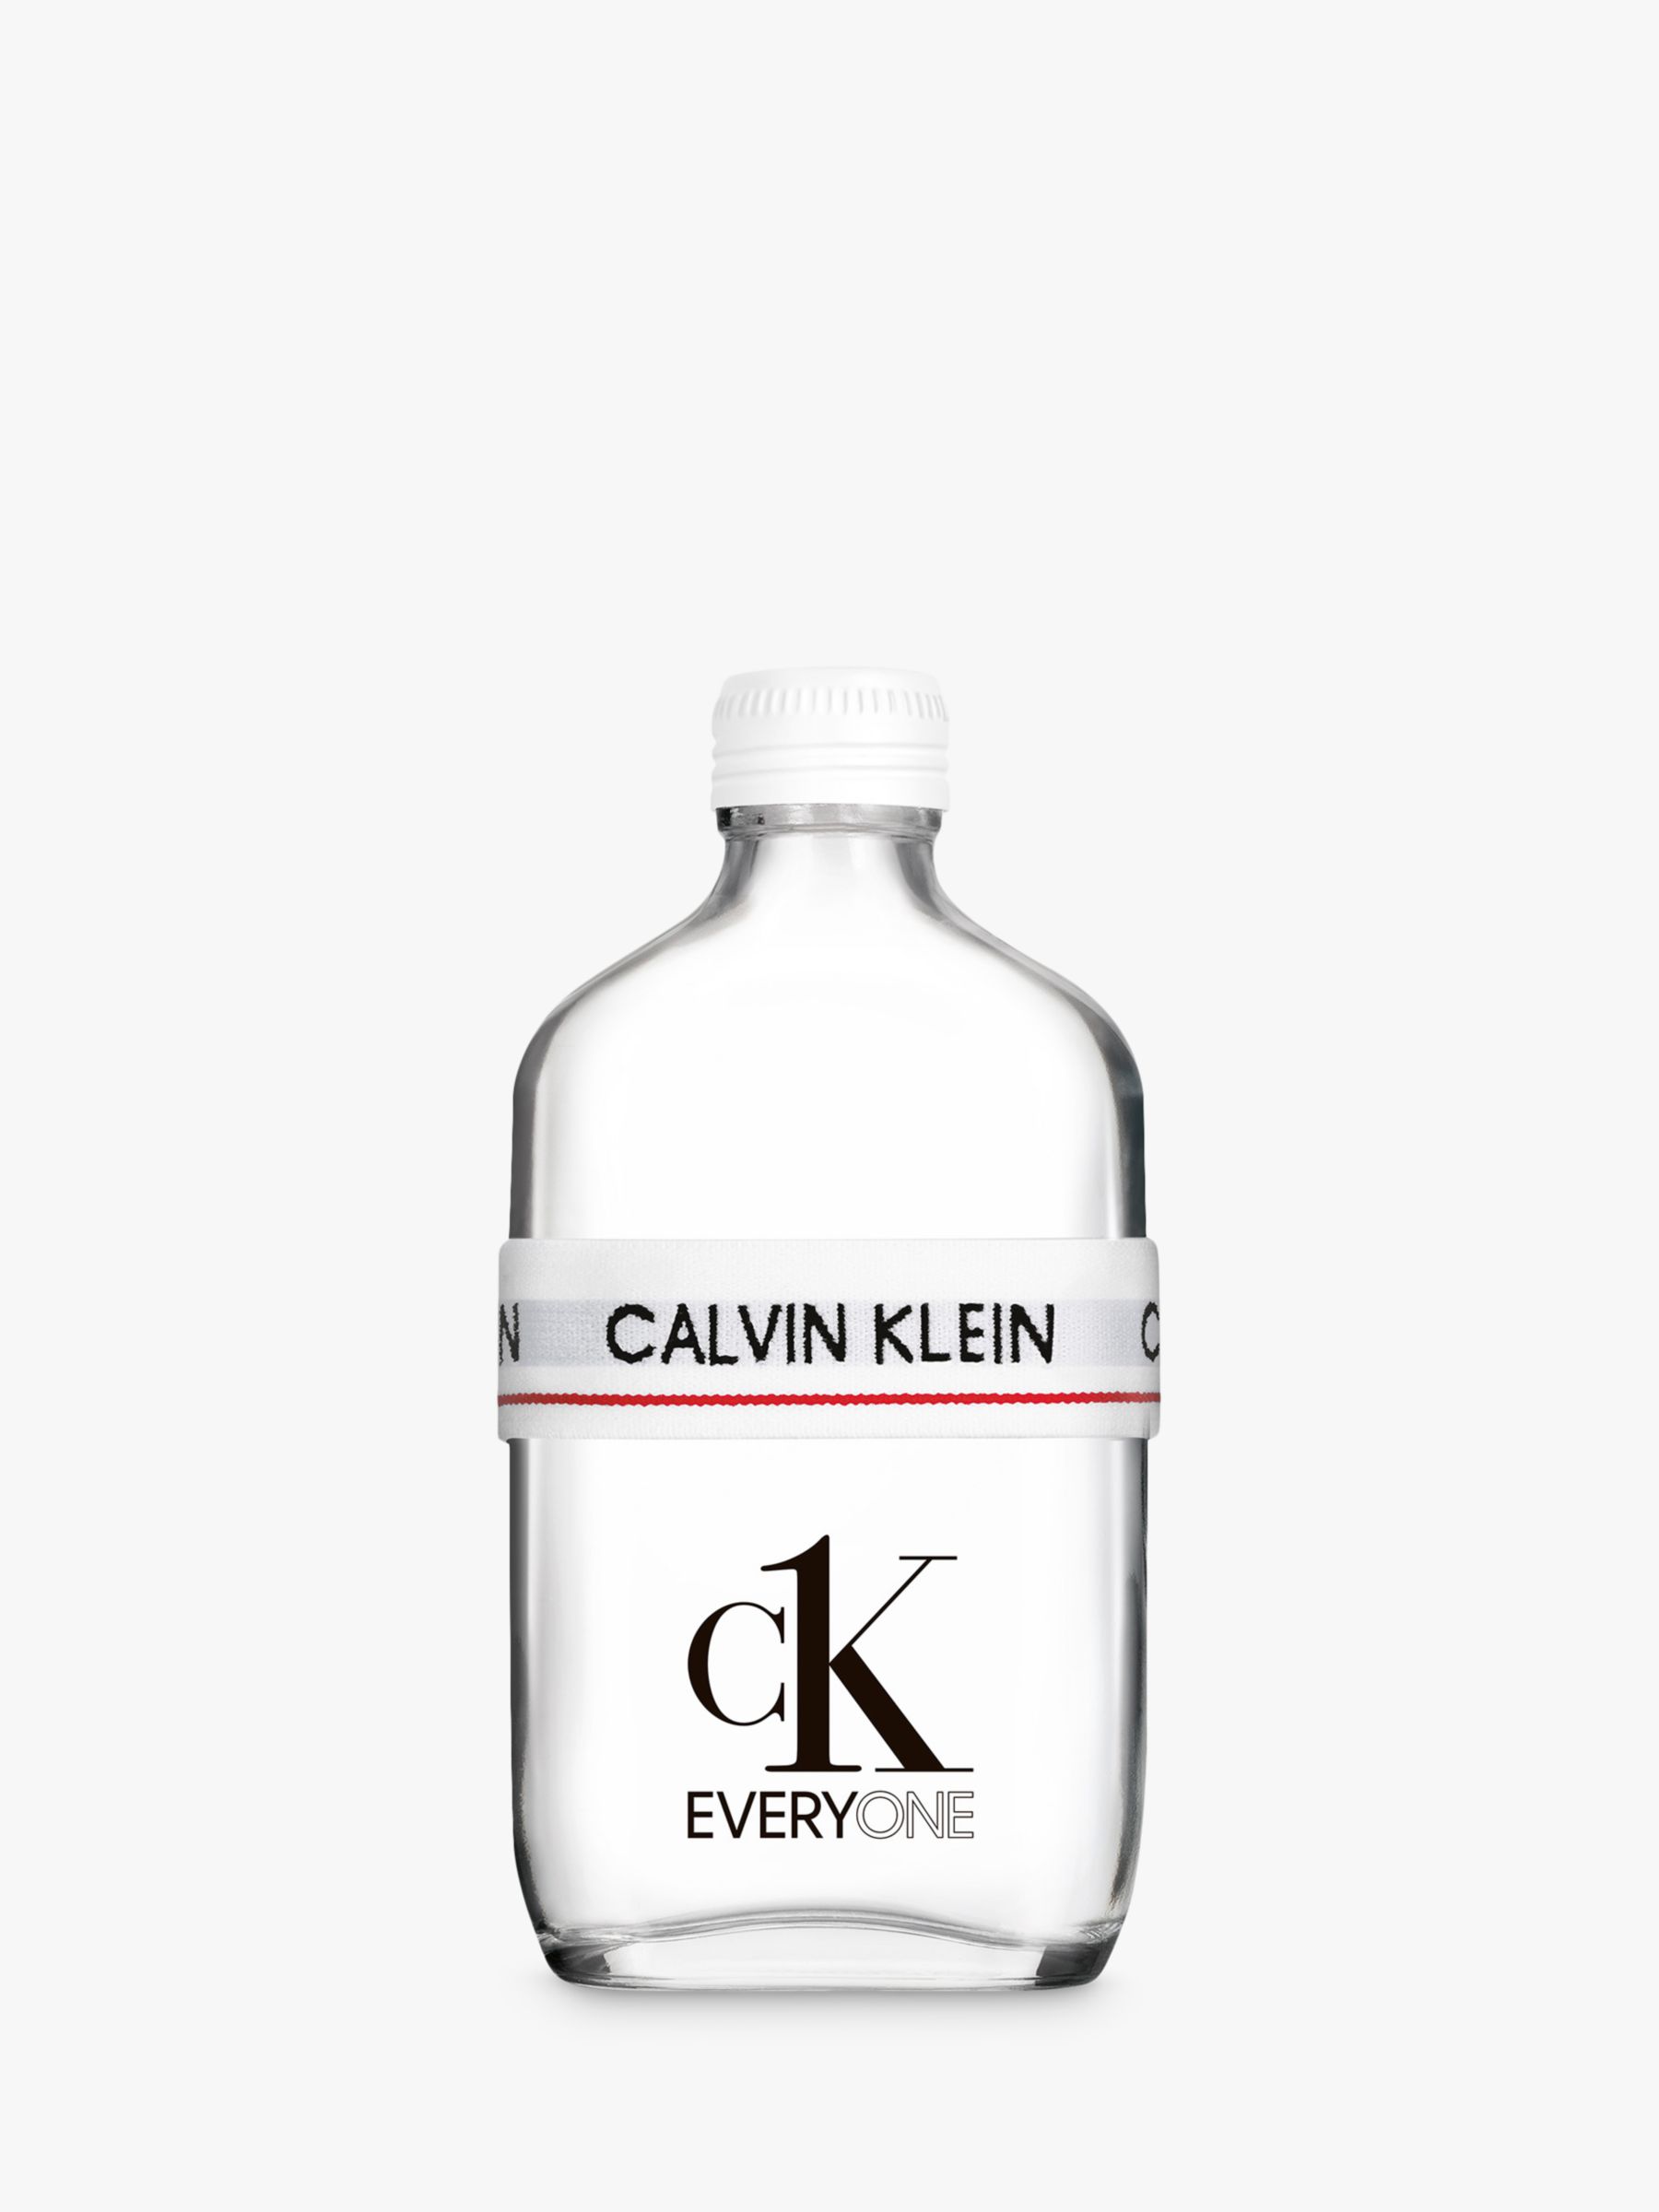 Calvin Klein CK EVERYONE Eau de Toilette, 100ml at John Lewis & Partners